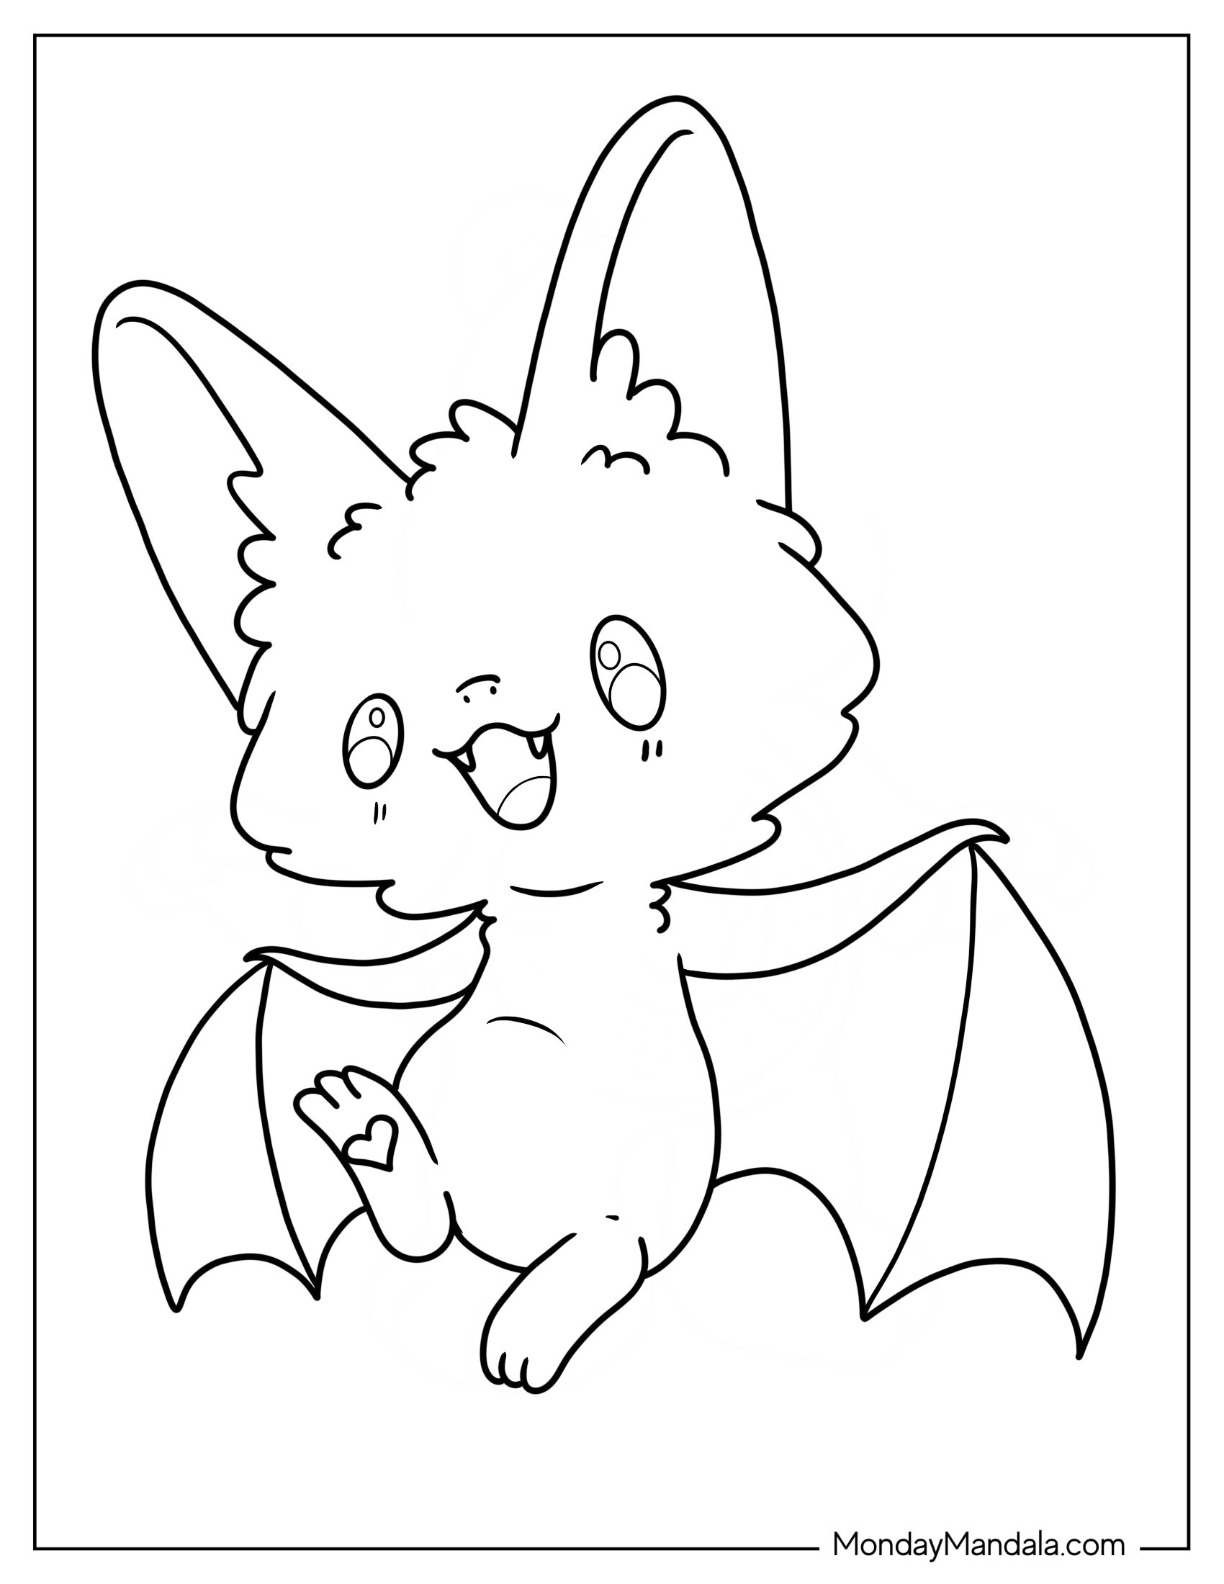 Bat coloring pages free pdf printables